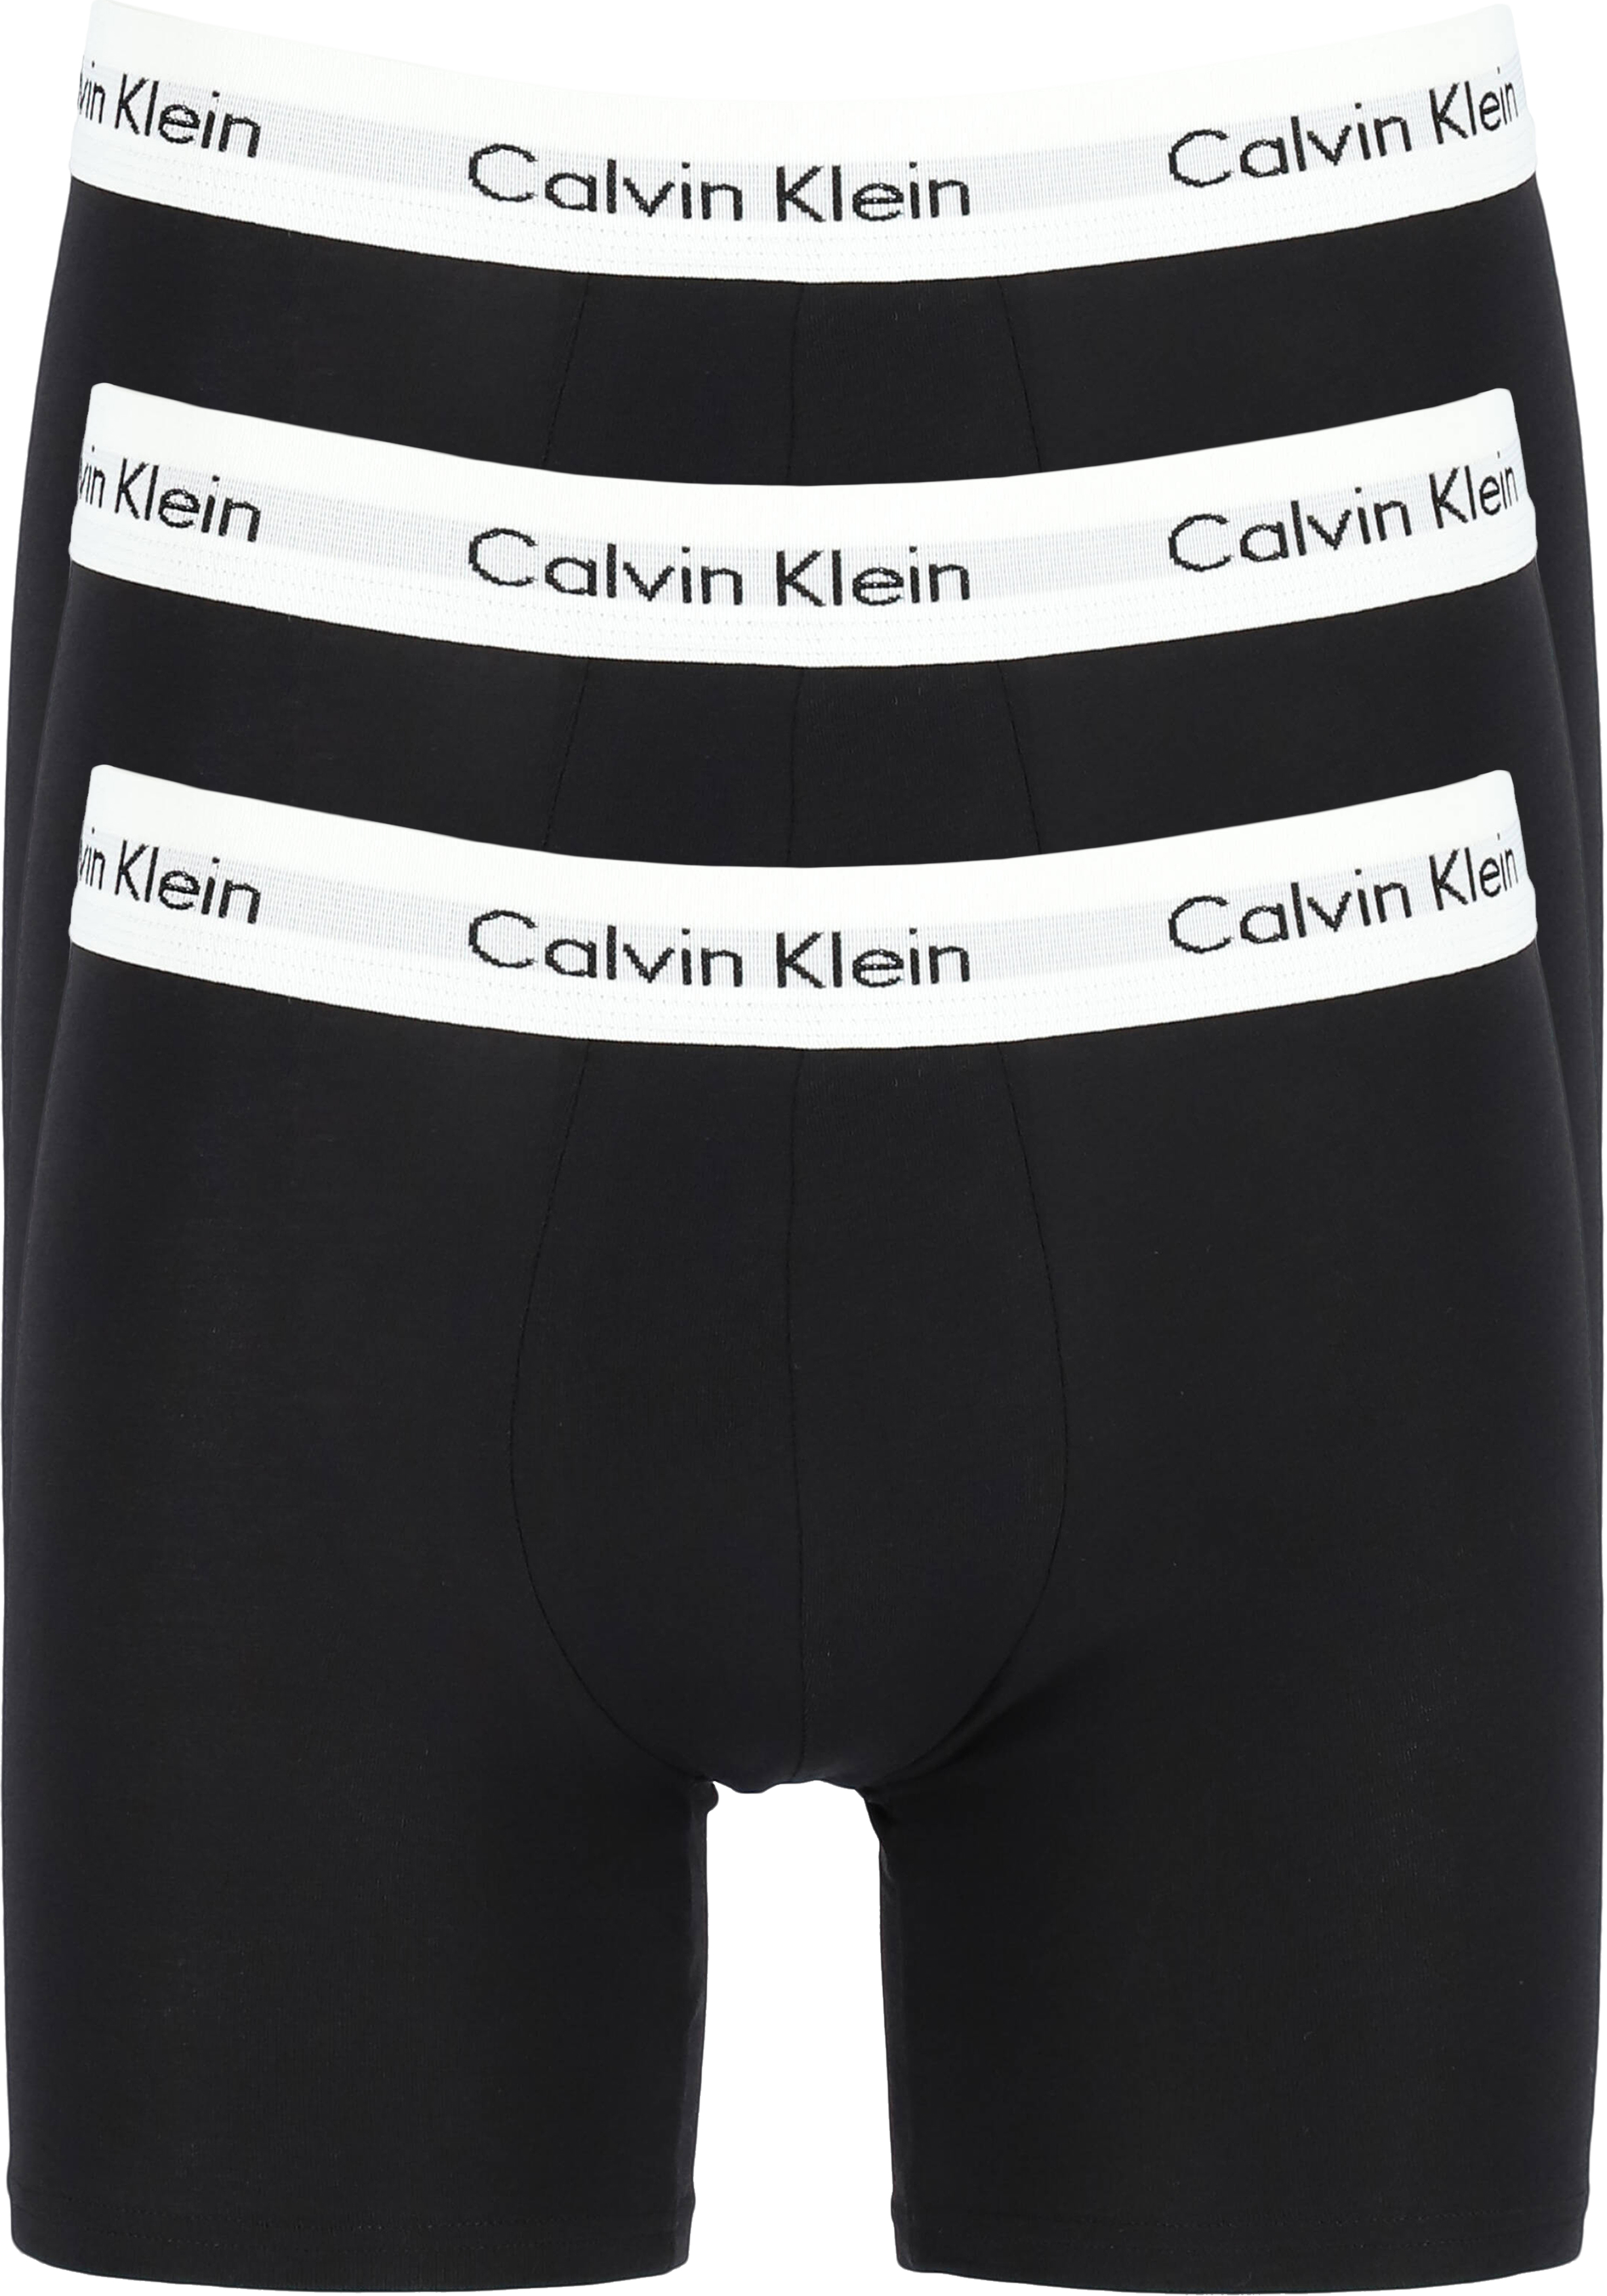 Calvin Klein Cotton Stretch boxer brief (3-pack), heren boxers extra lang, zwart met witte tailleband  